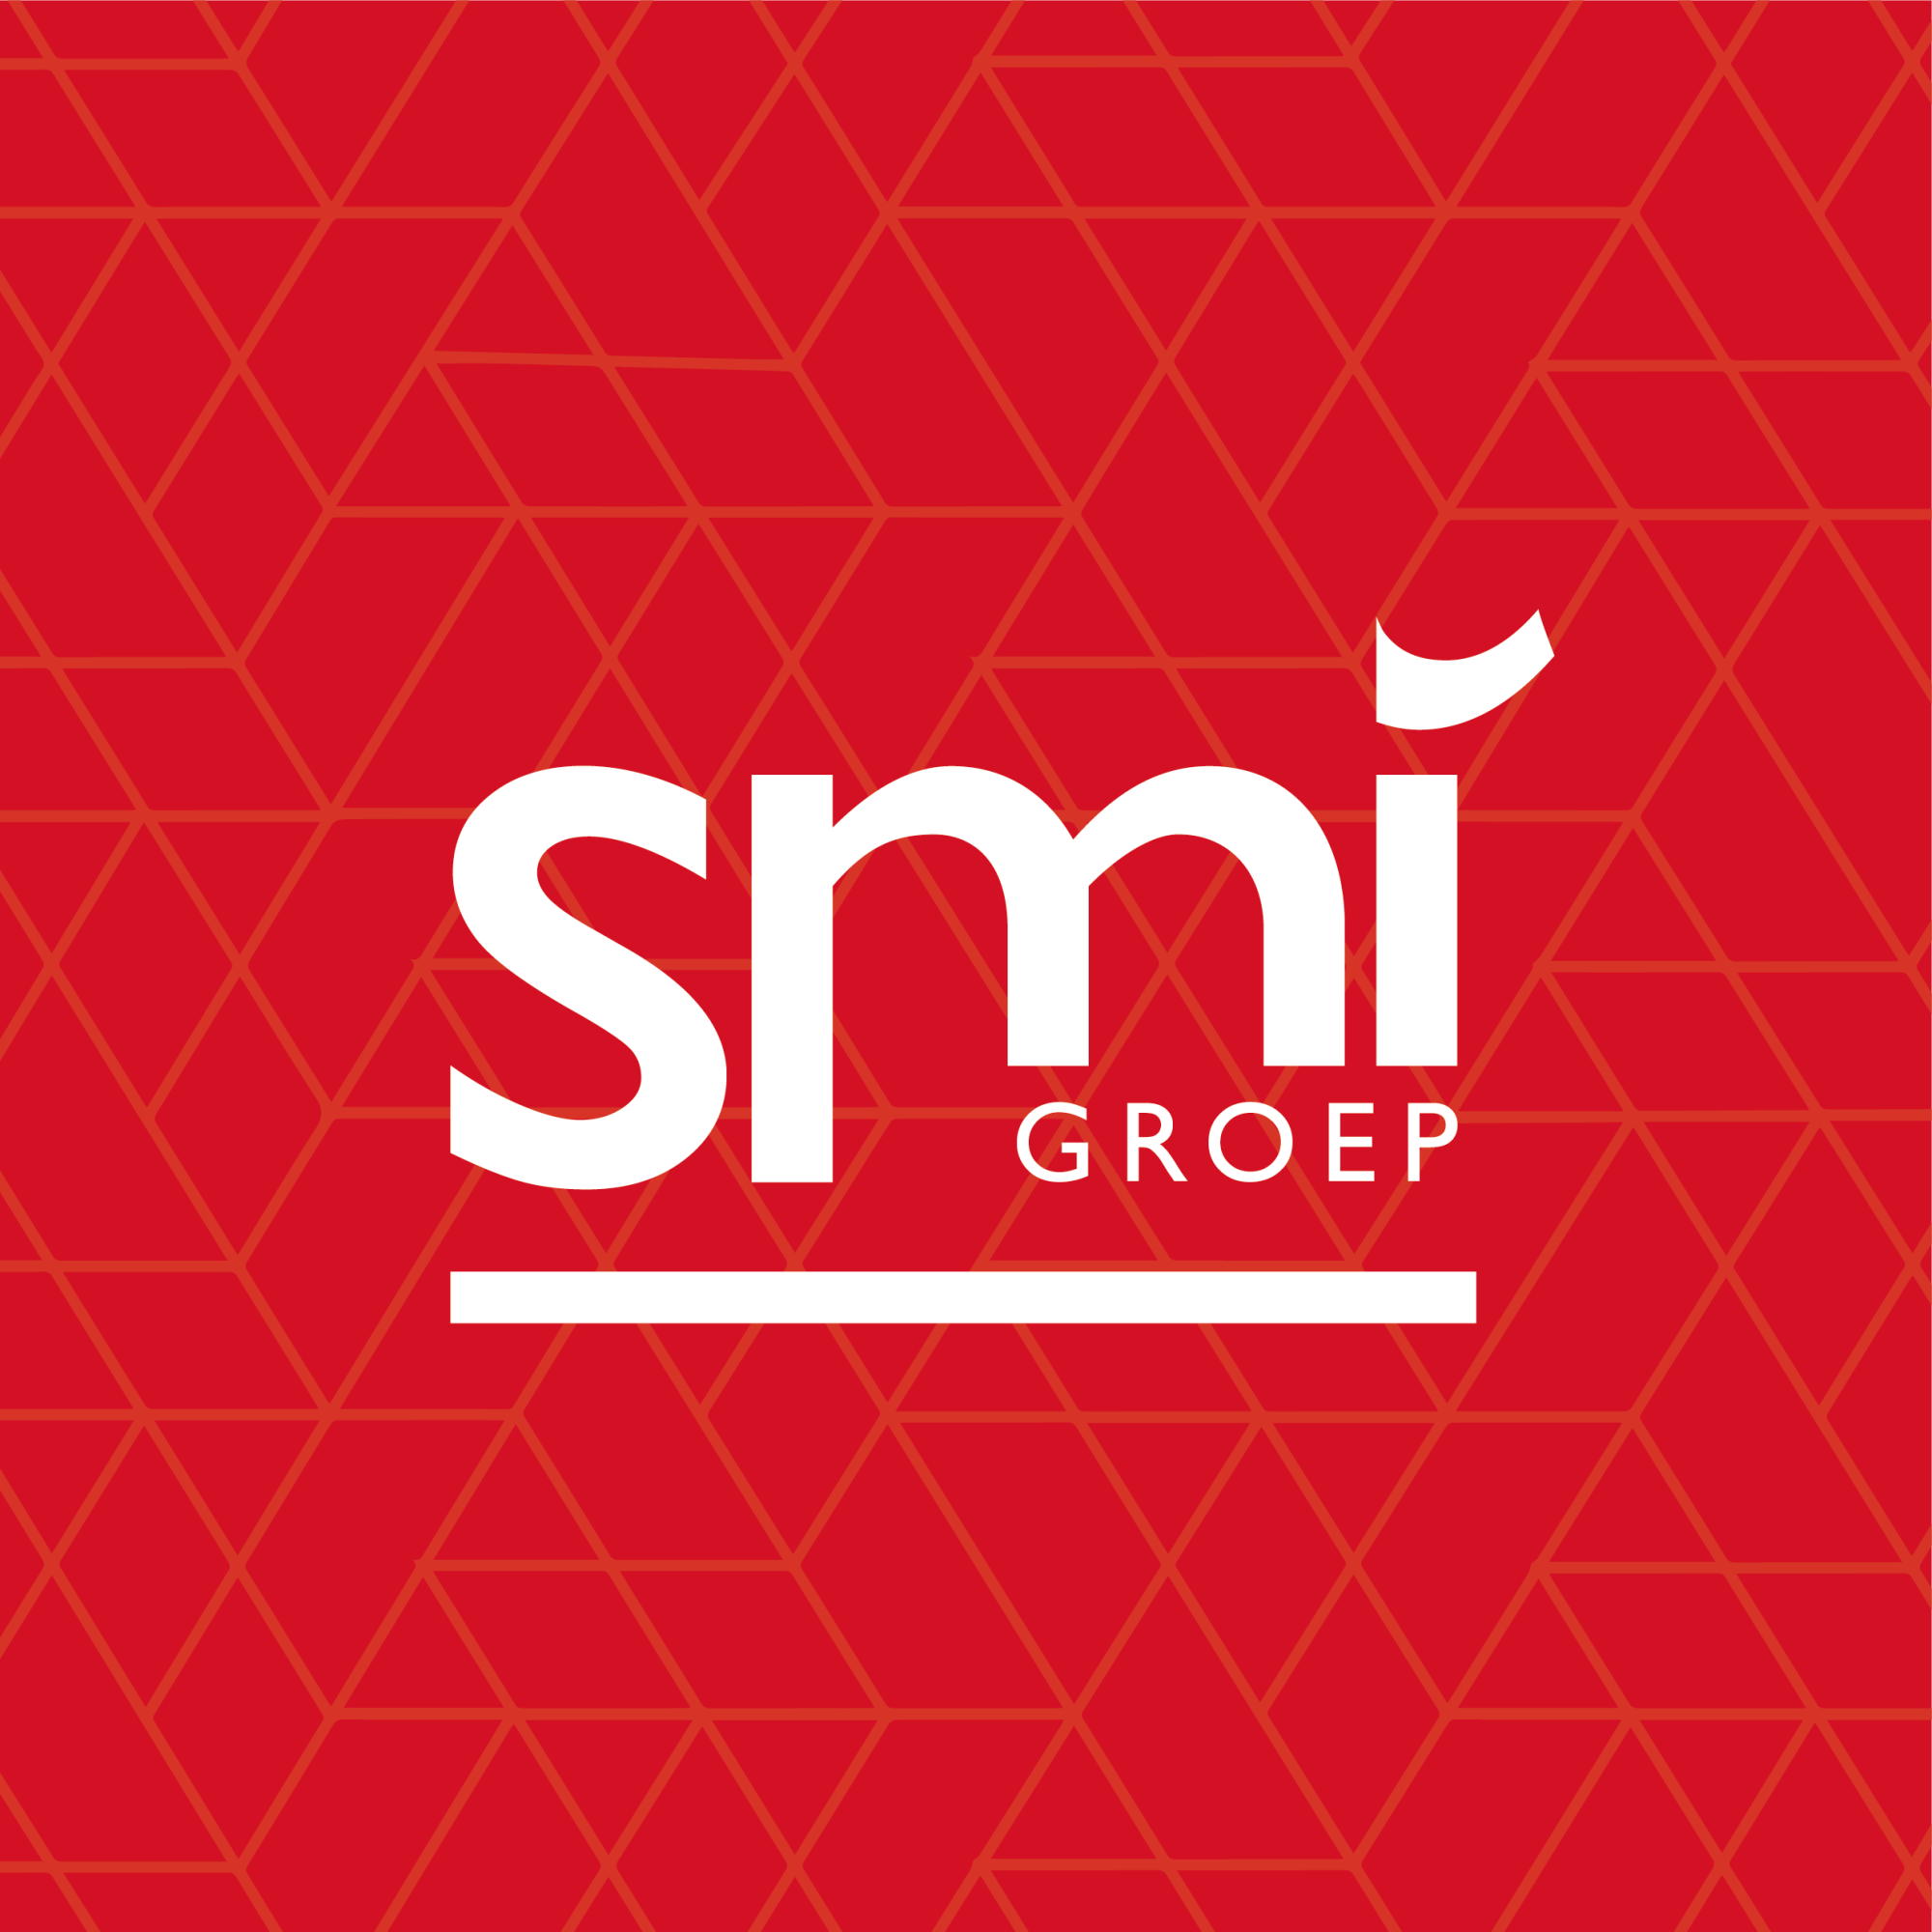 SMI groep logo witte letters rode achtergrond